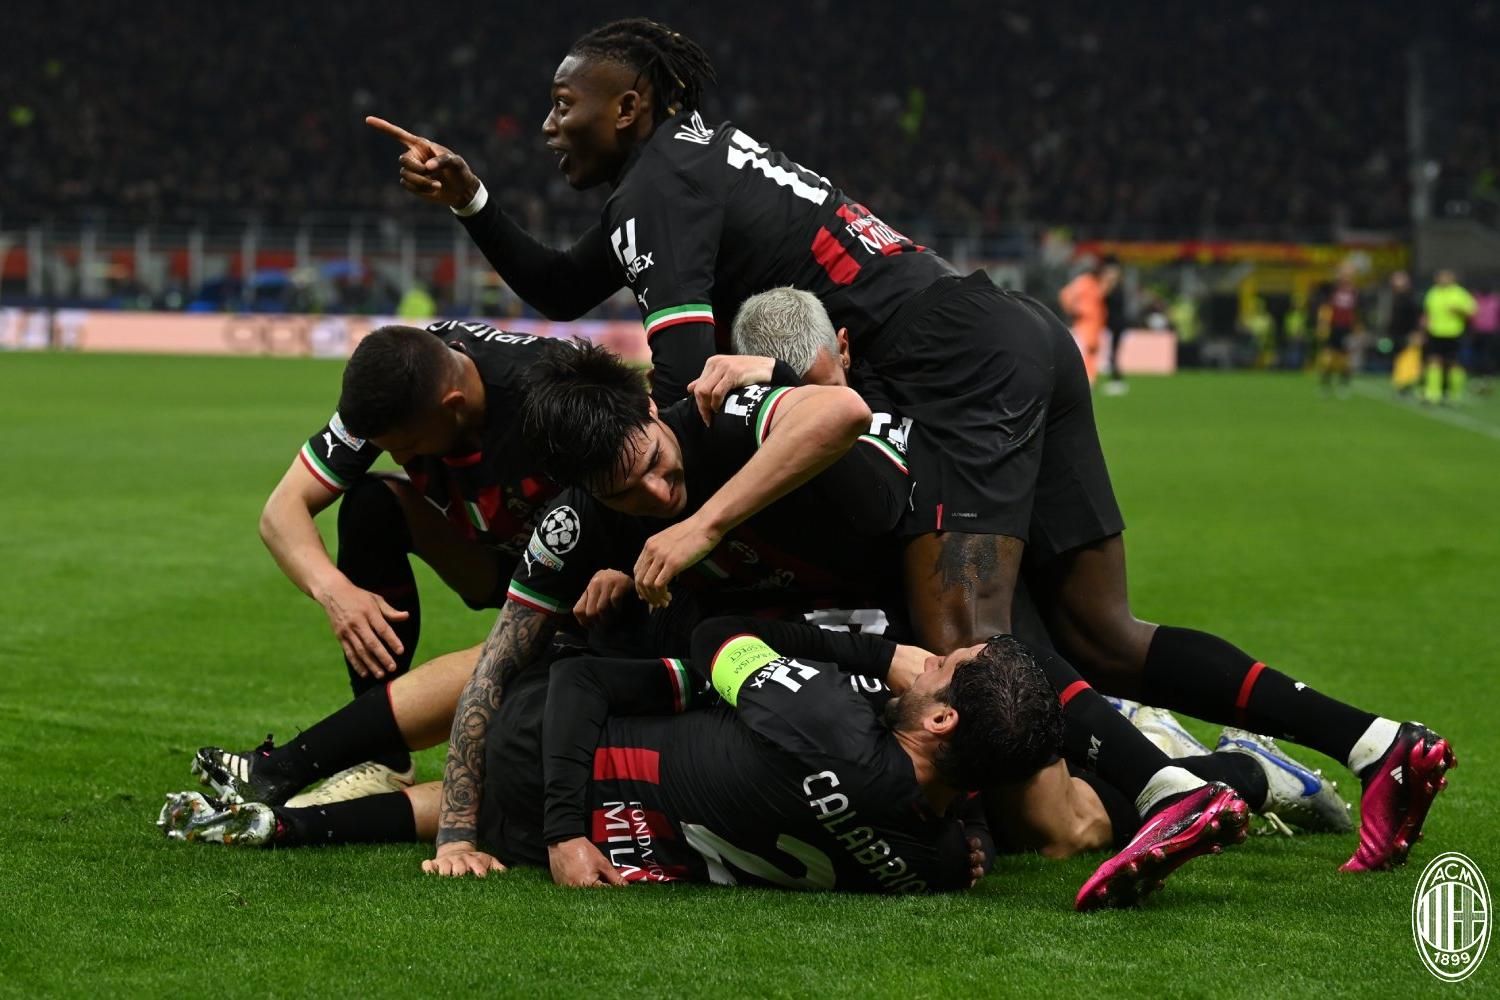 Champions League: Liverpool faz 7 a 1, e Napoli vence novamente